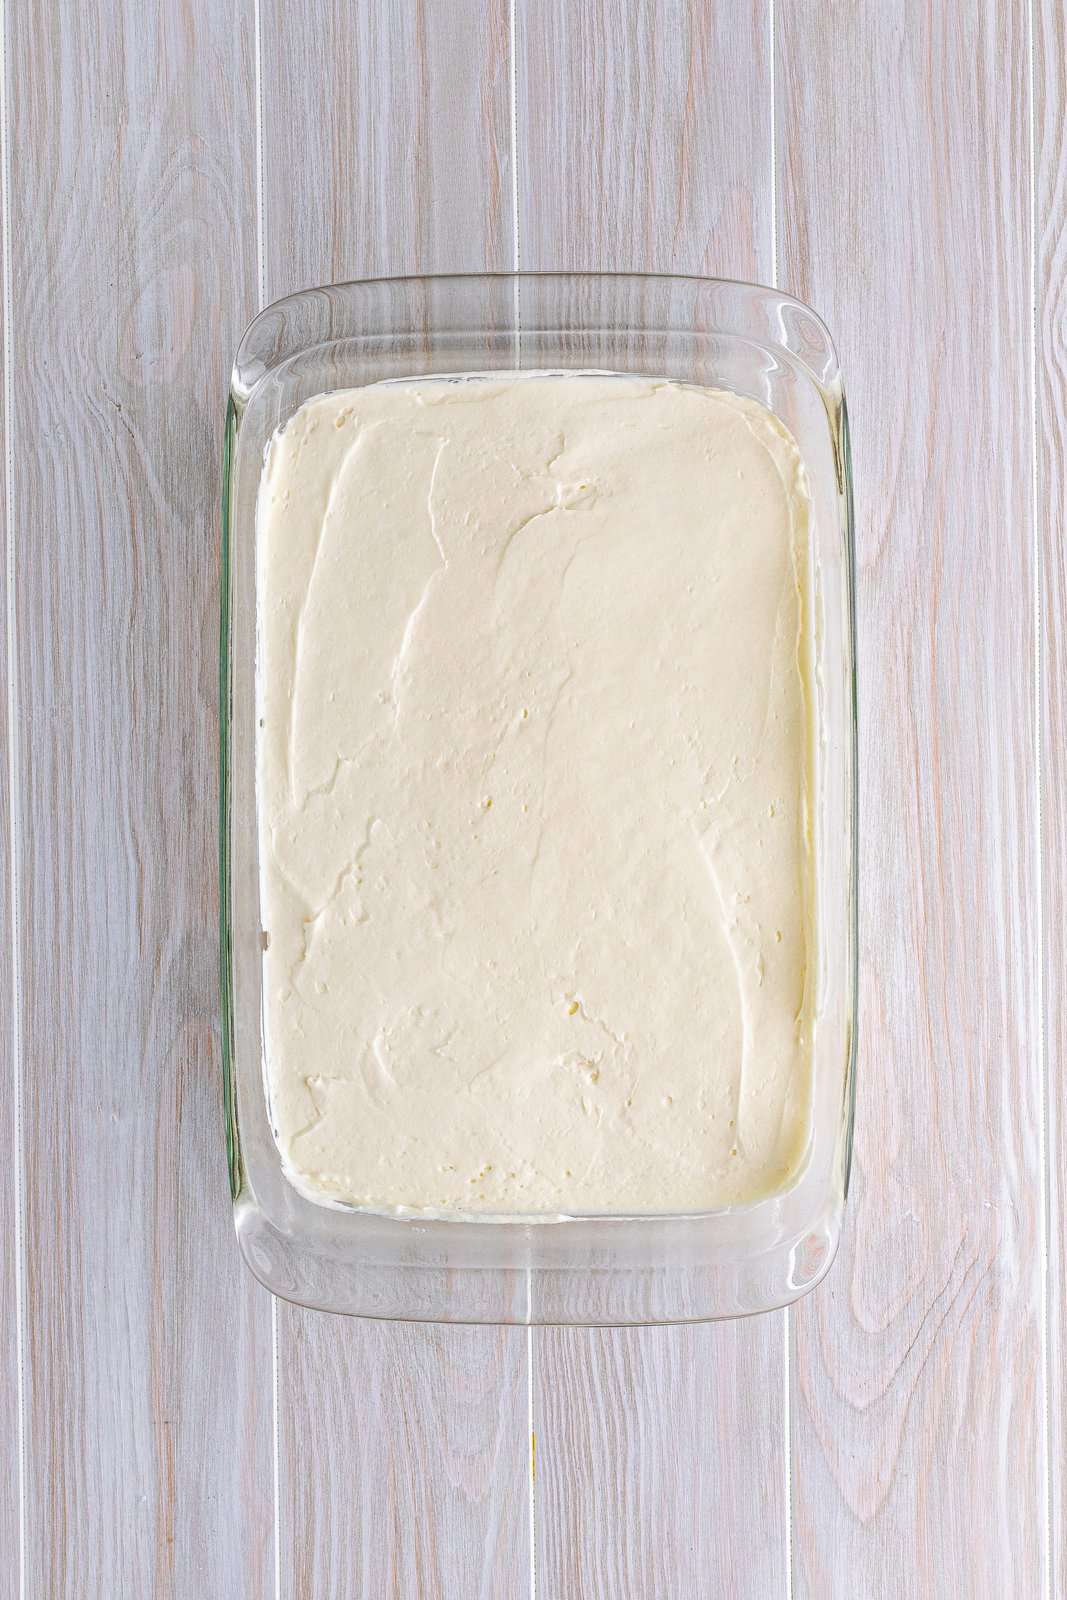 Cream cheese mixture spread over crust.